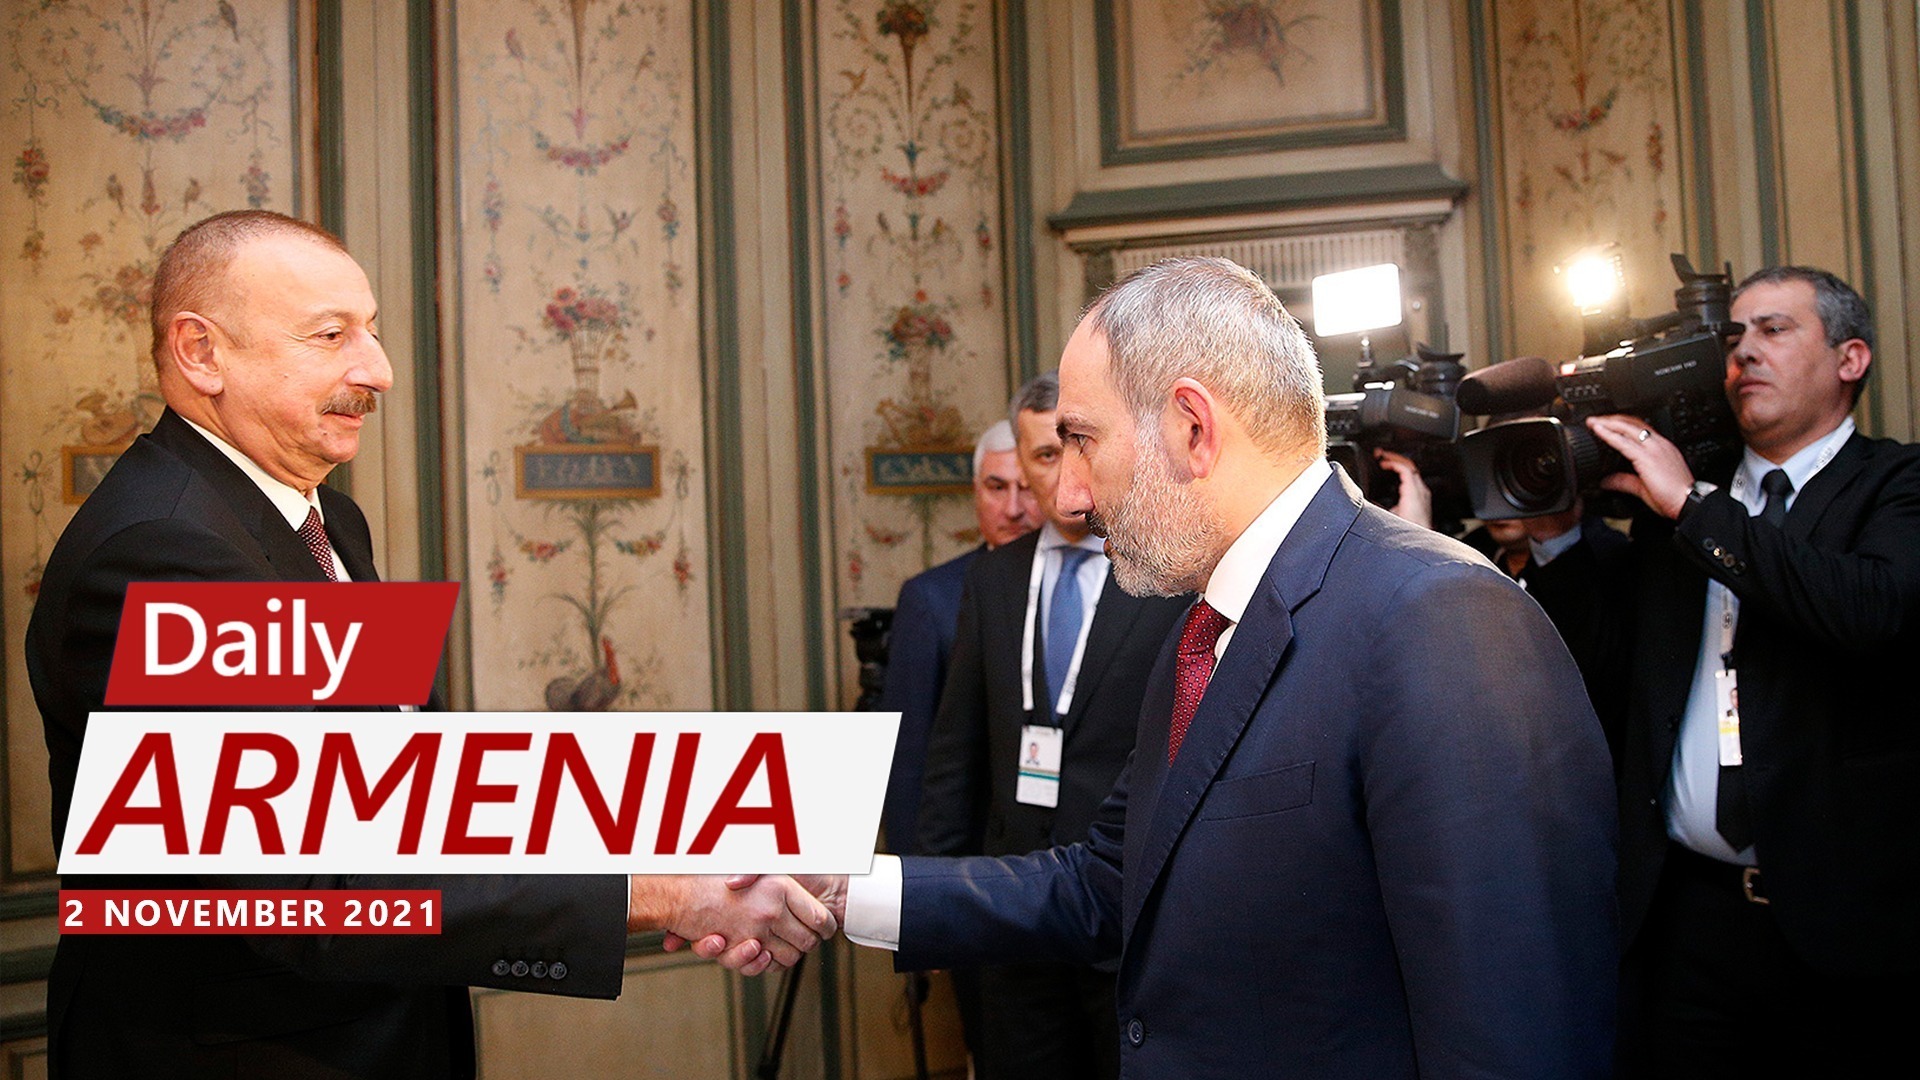 Pashinyan and Aliyev discussed new negotiation format, says Erdogan